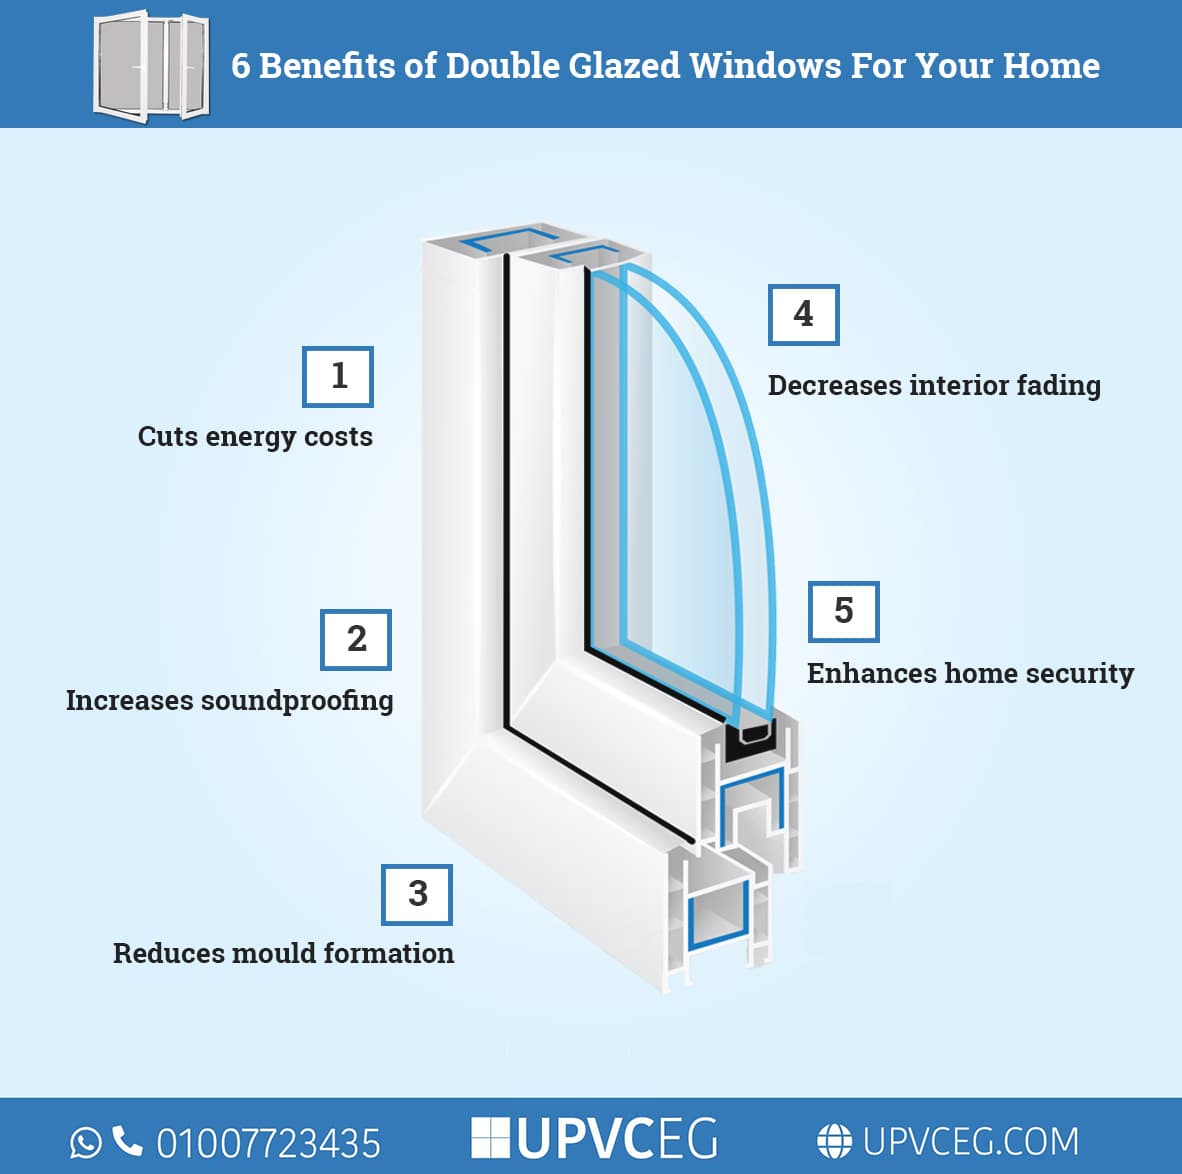 5 benefits of double glazed windows